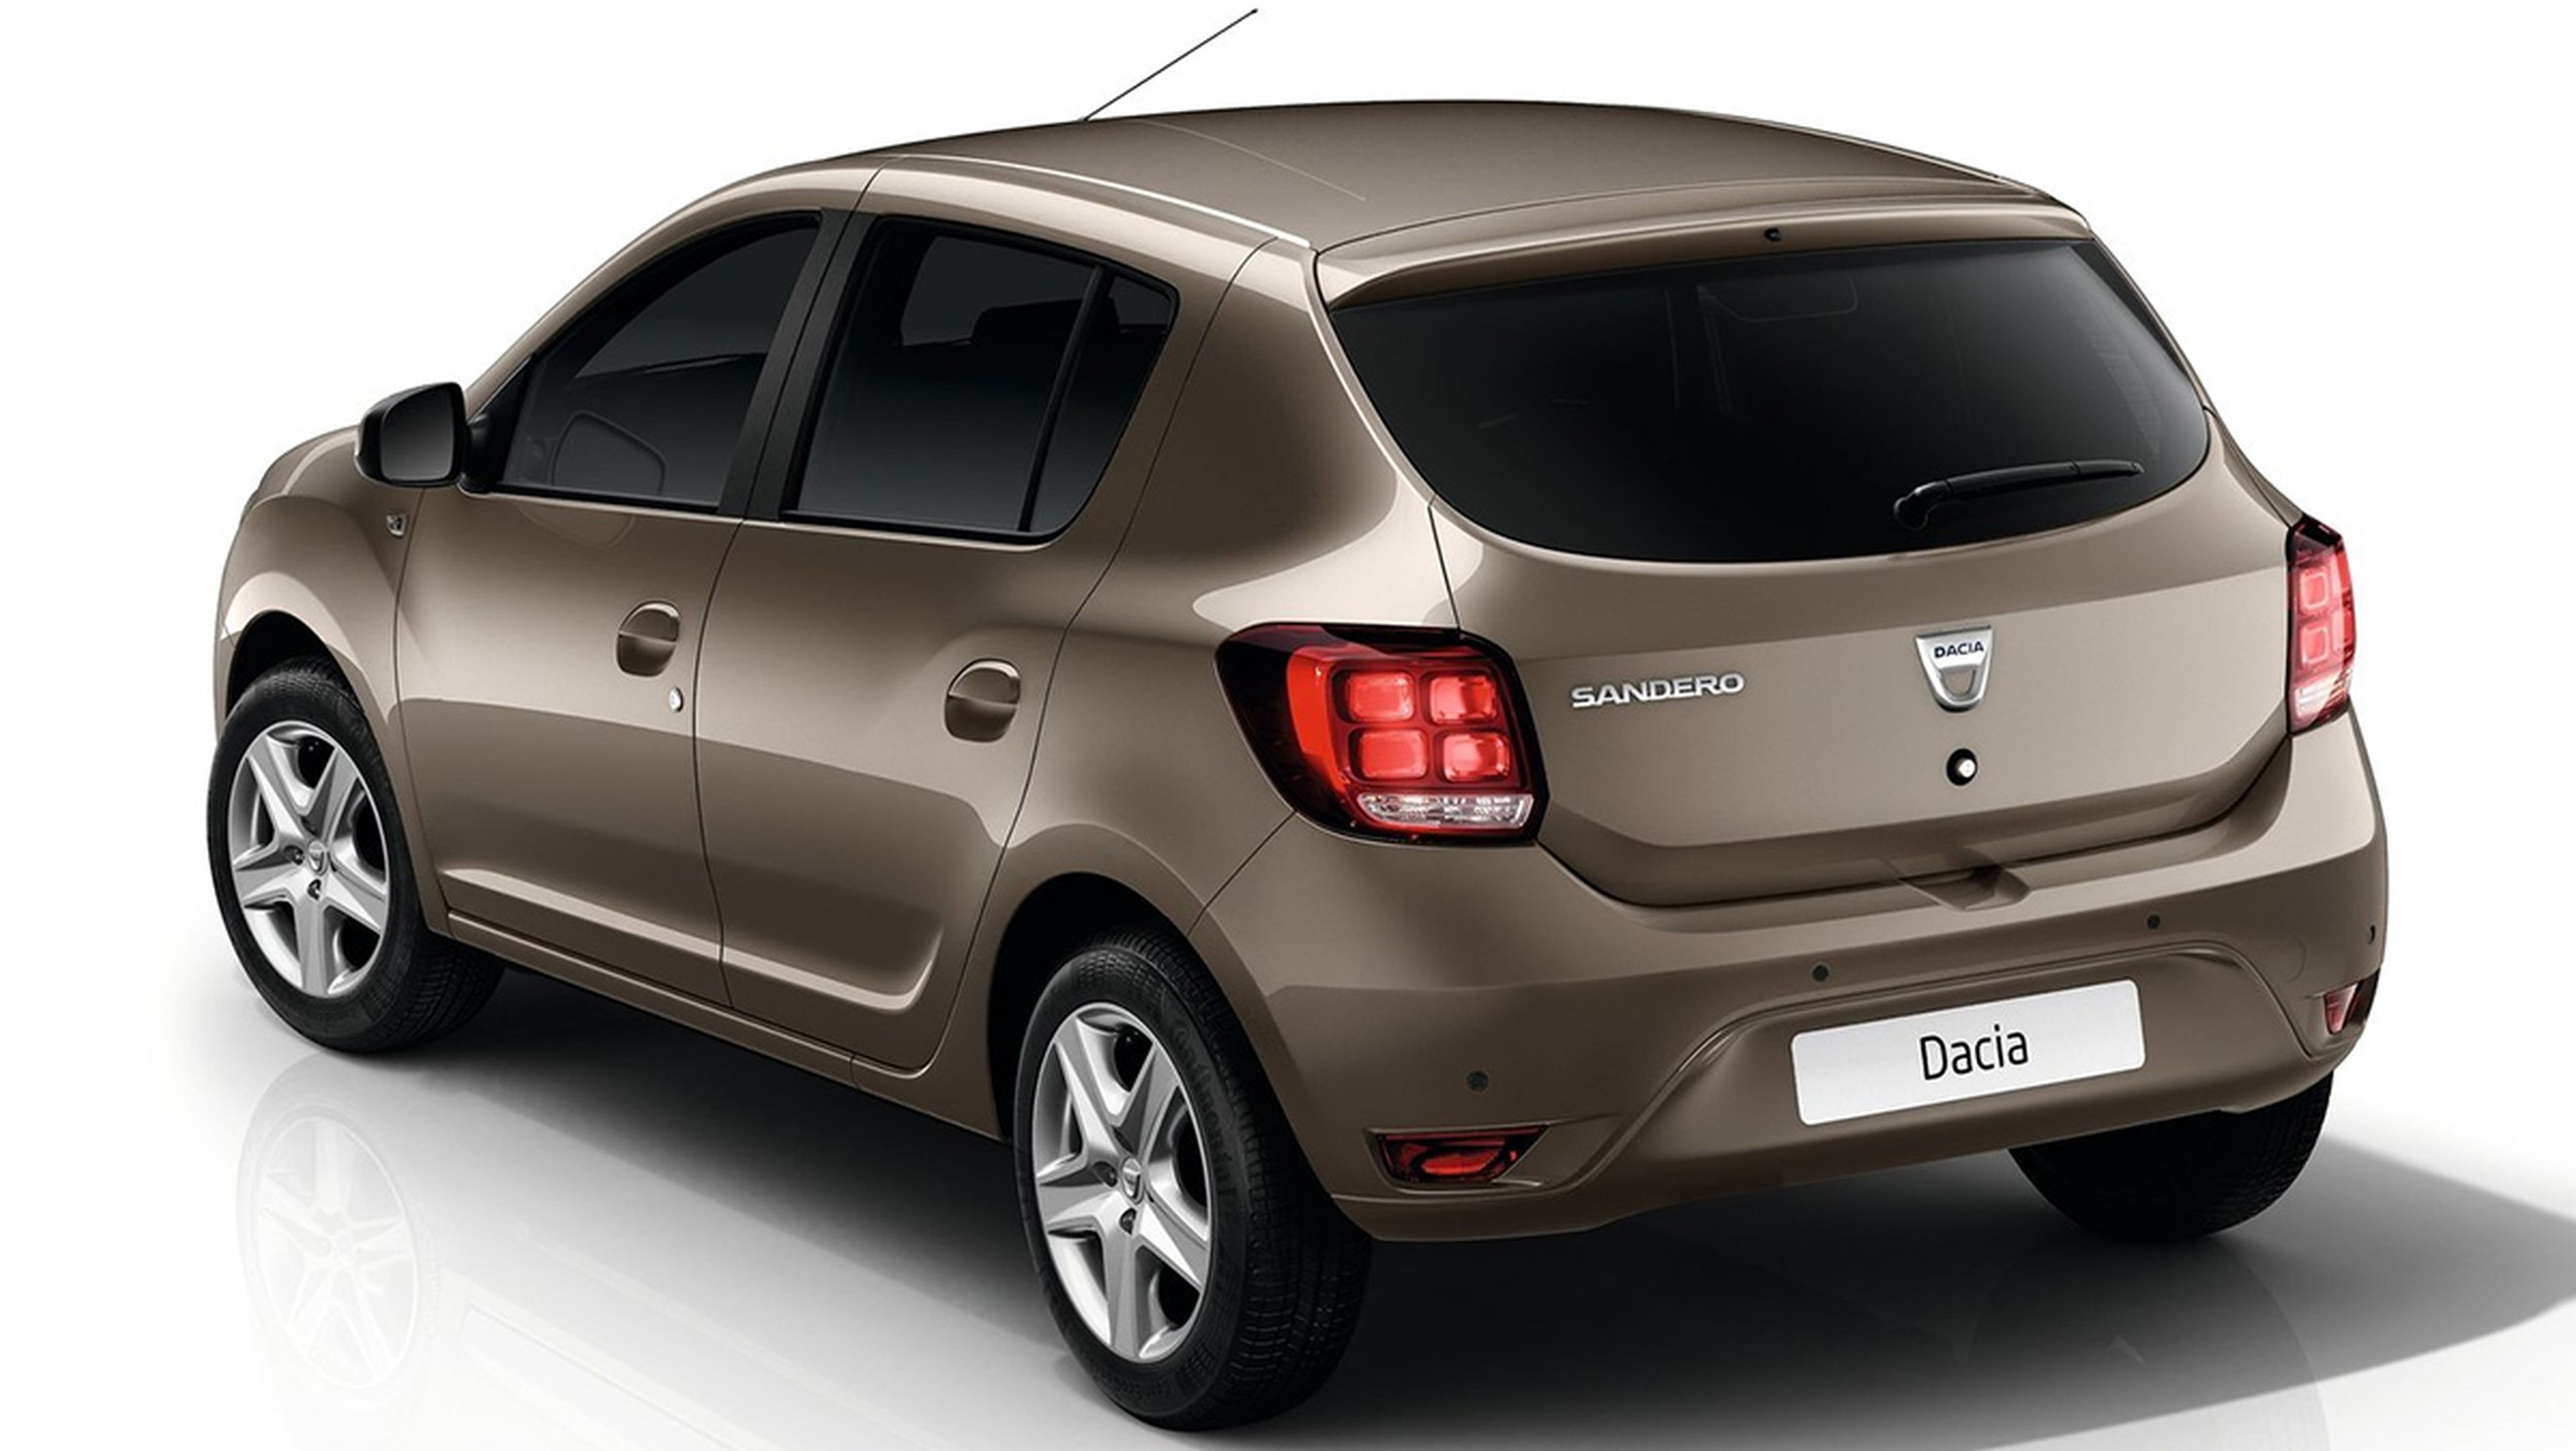 Coches nuevos por menos de 7.000 euros - Dacia Sandero